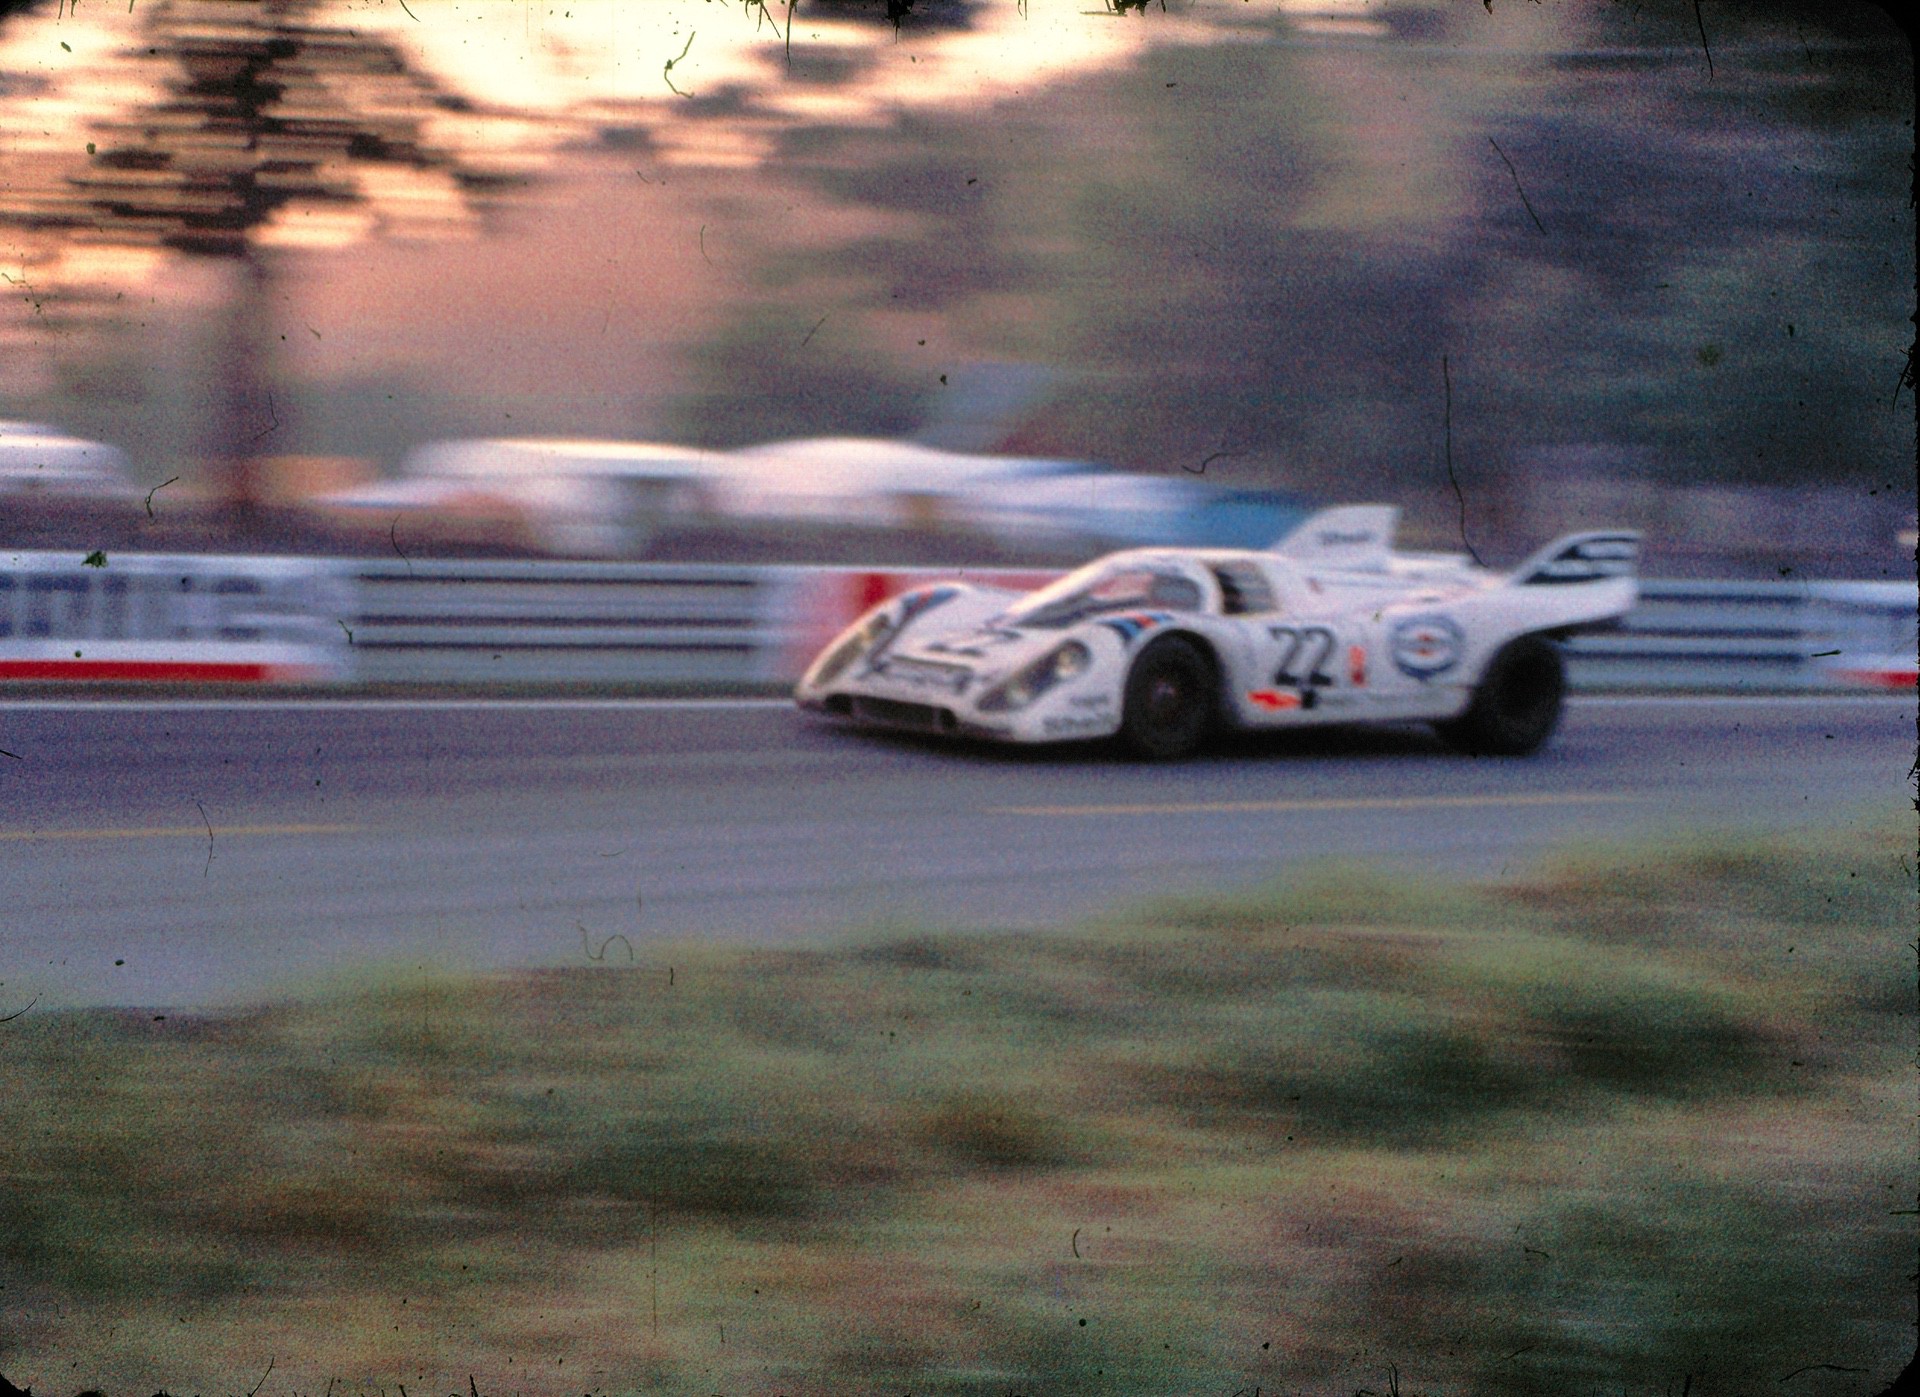 #22 Porsche 917K of Helmut Marko and Gijs van Lennep during the 1971 24 Hours of Le Mans